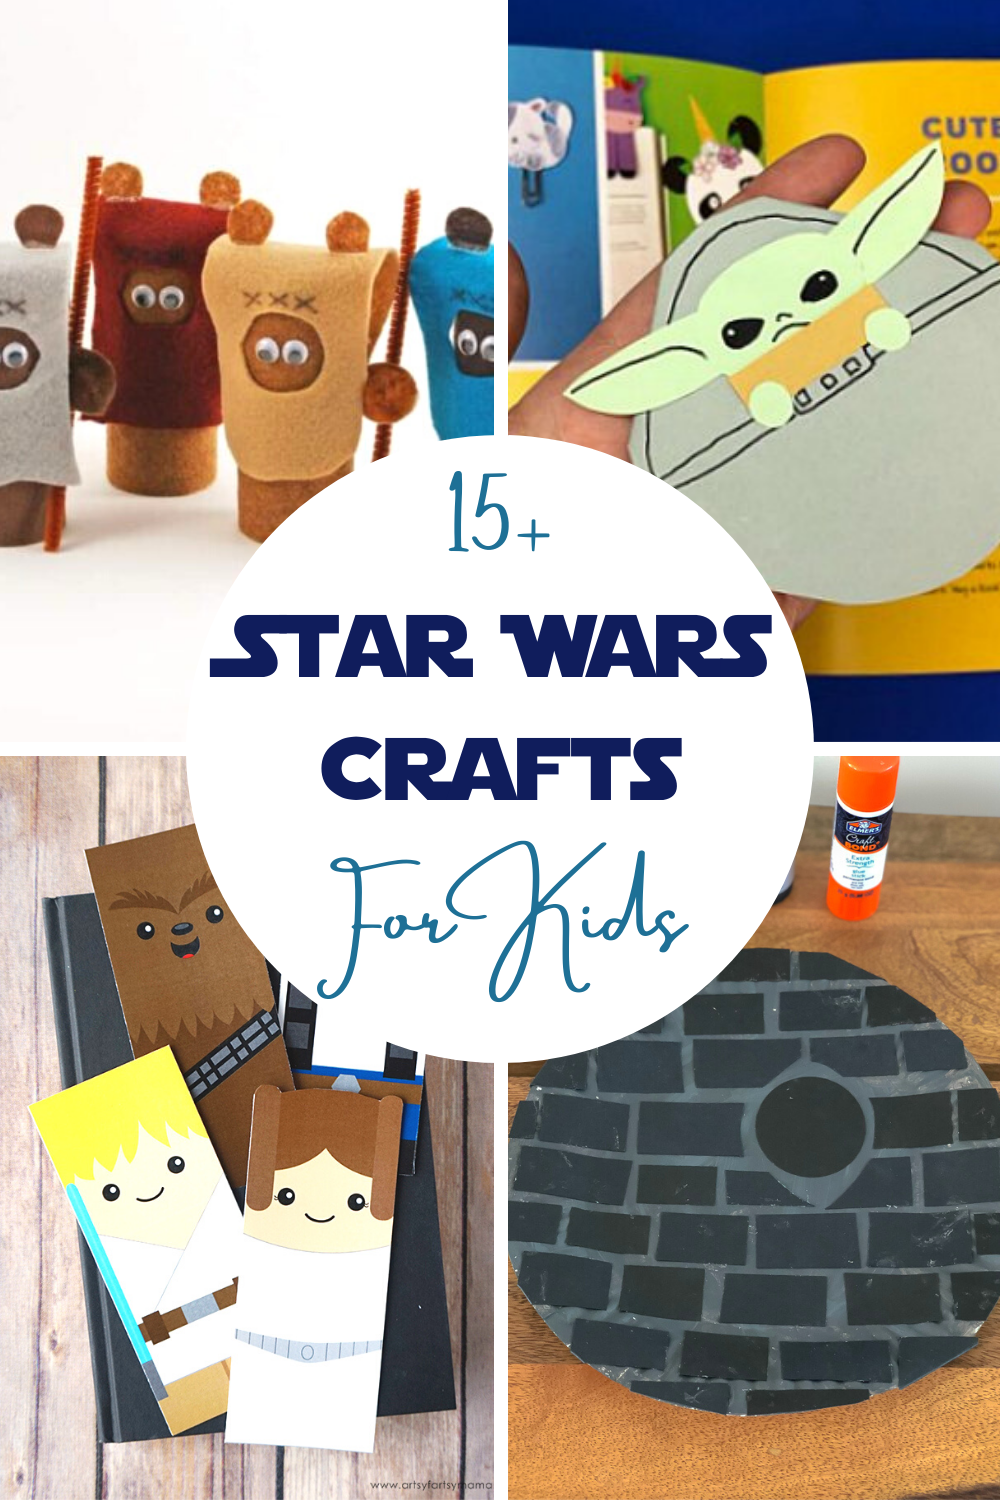 https://popshopamerica.com/wp-content/uploads/2021/04/15-Star-Wars-Crafts-for-Kids-feature.png